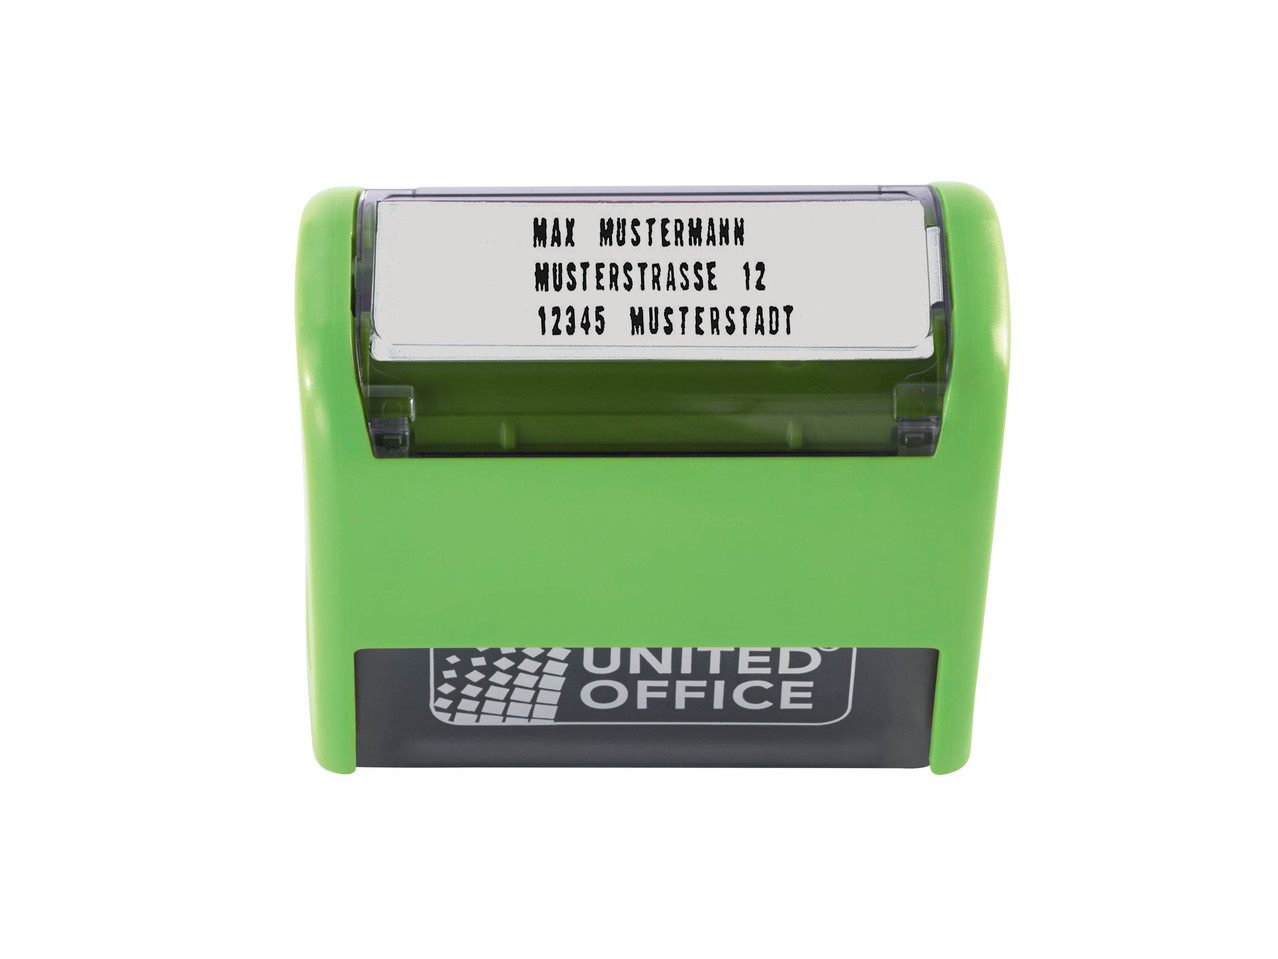 UNITED OFFICE Stamp Kit